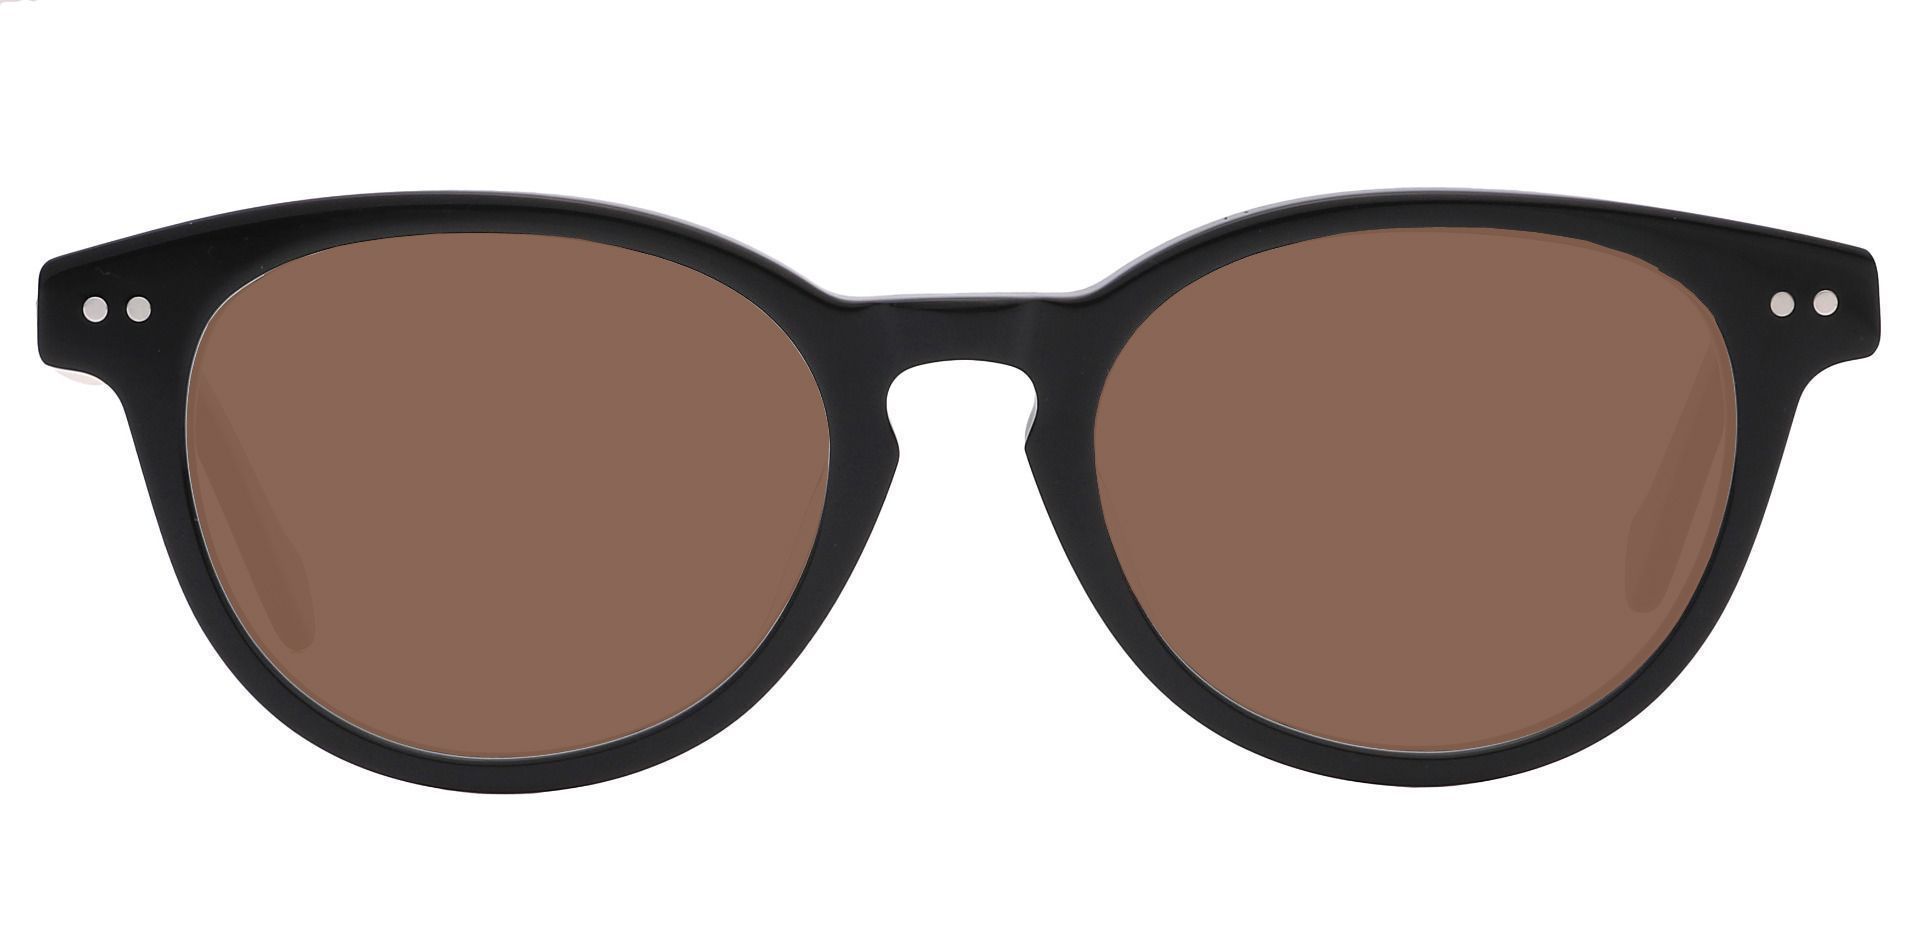 Oakland Oval Prescription Sunglasses Black Frame With Brown Lenses